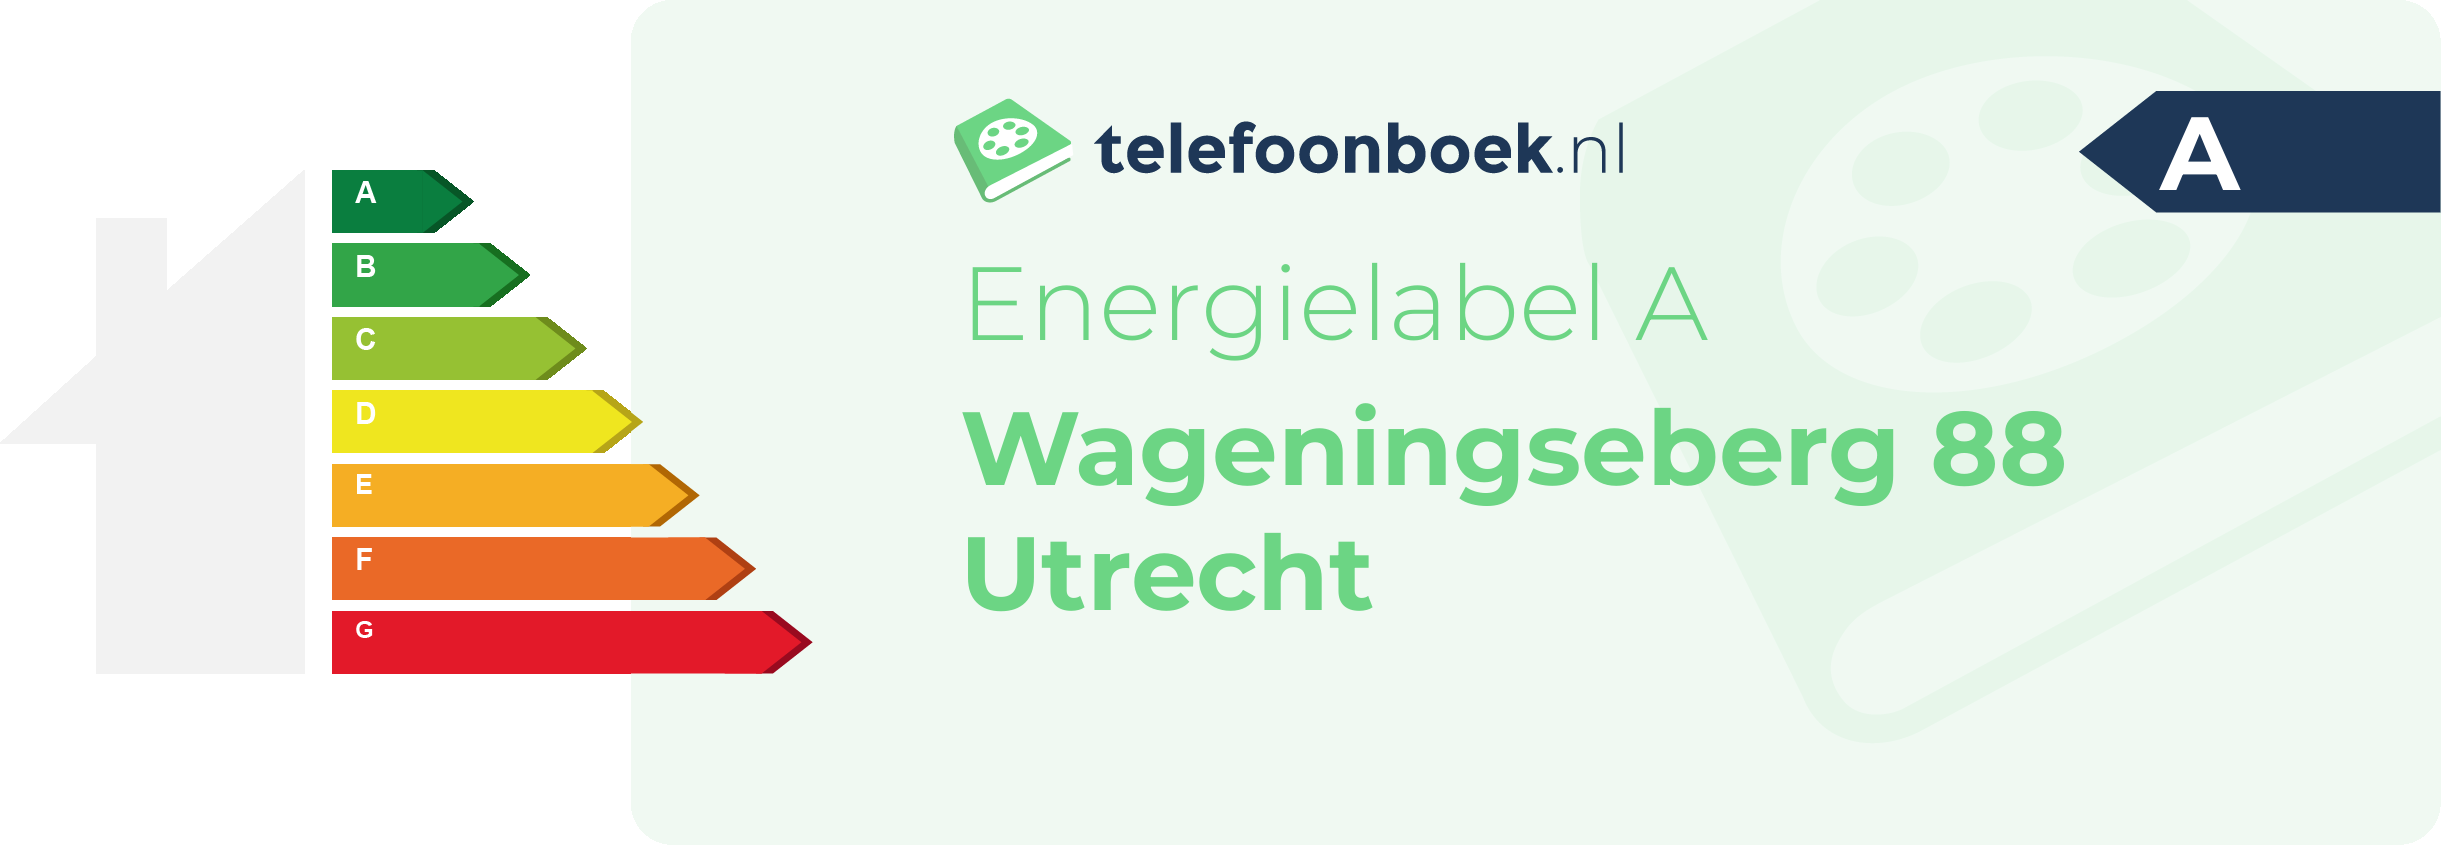 Energielabel Wageningseberg 88 Utrecht